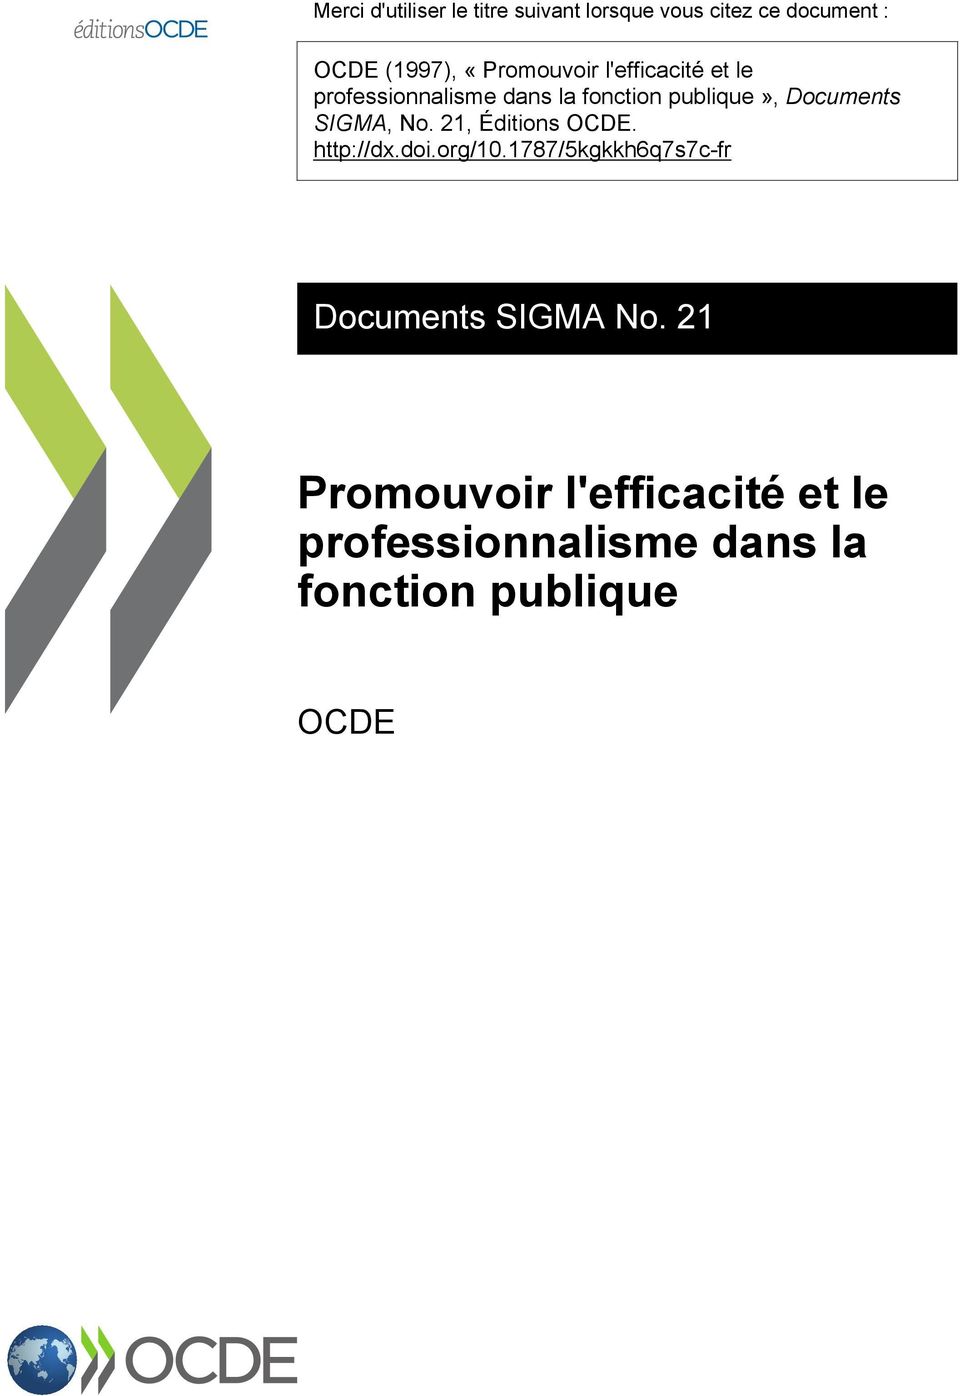 Documents SIGMA, No. 21, Éditions OCDE. http://dx.doi.org/10.